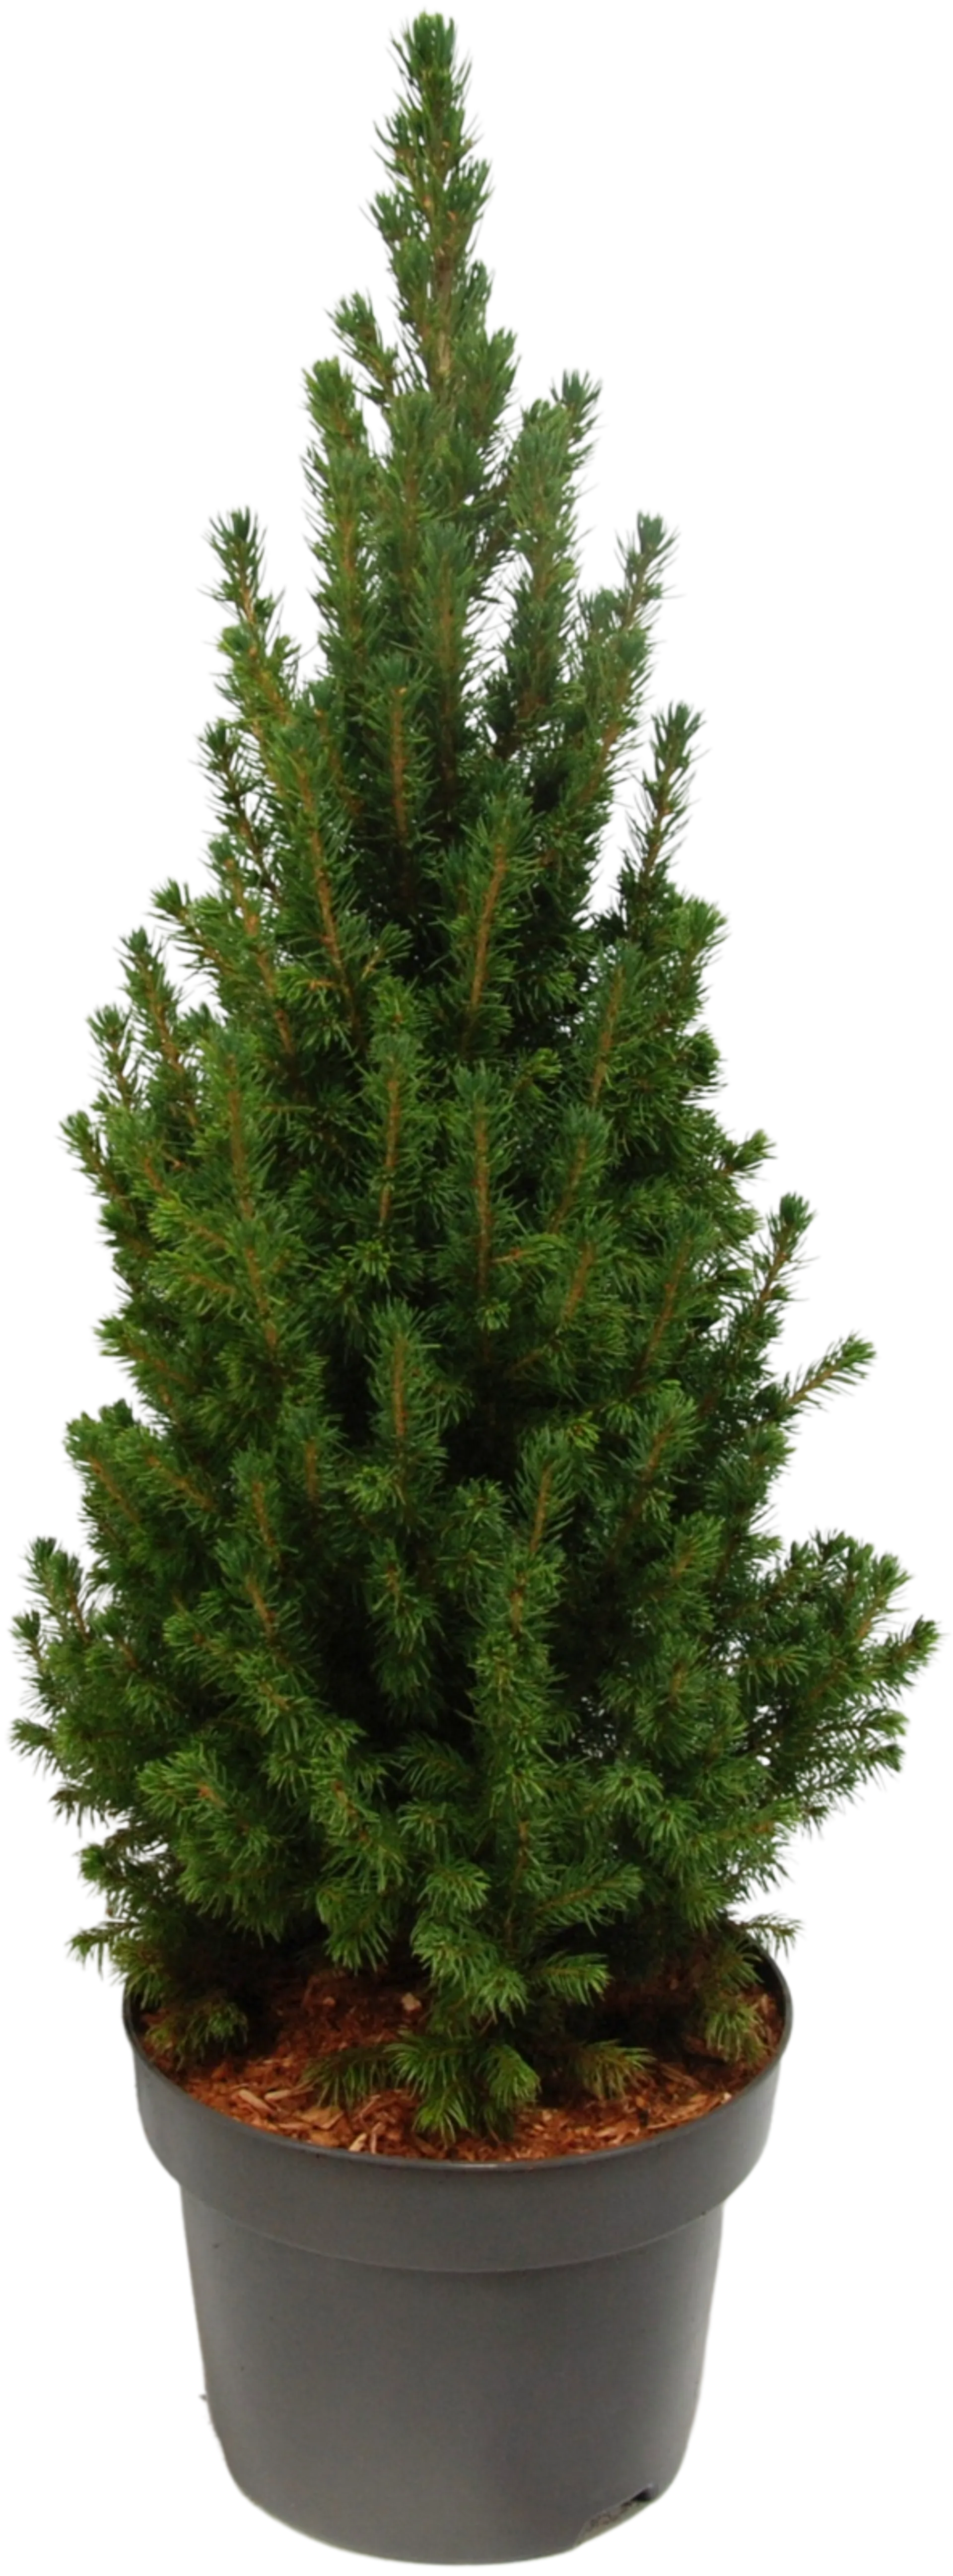 Kartiovalkokuusi 'Perfecta' 60-70 cm astiataimi 5 l ruukku Picea glauca 'Perfecta'